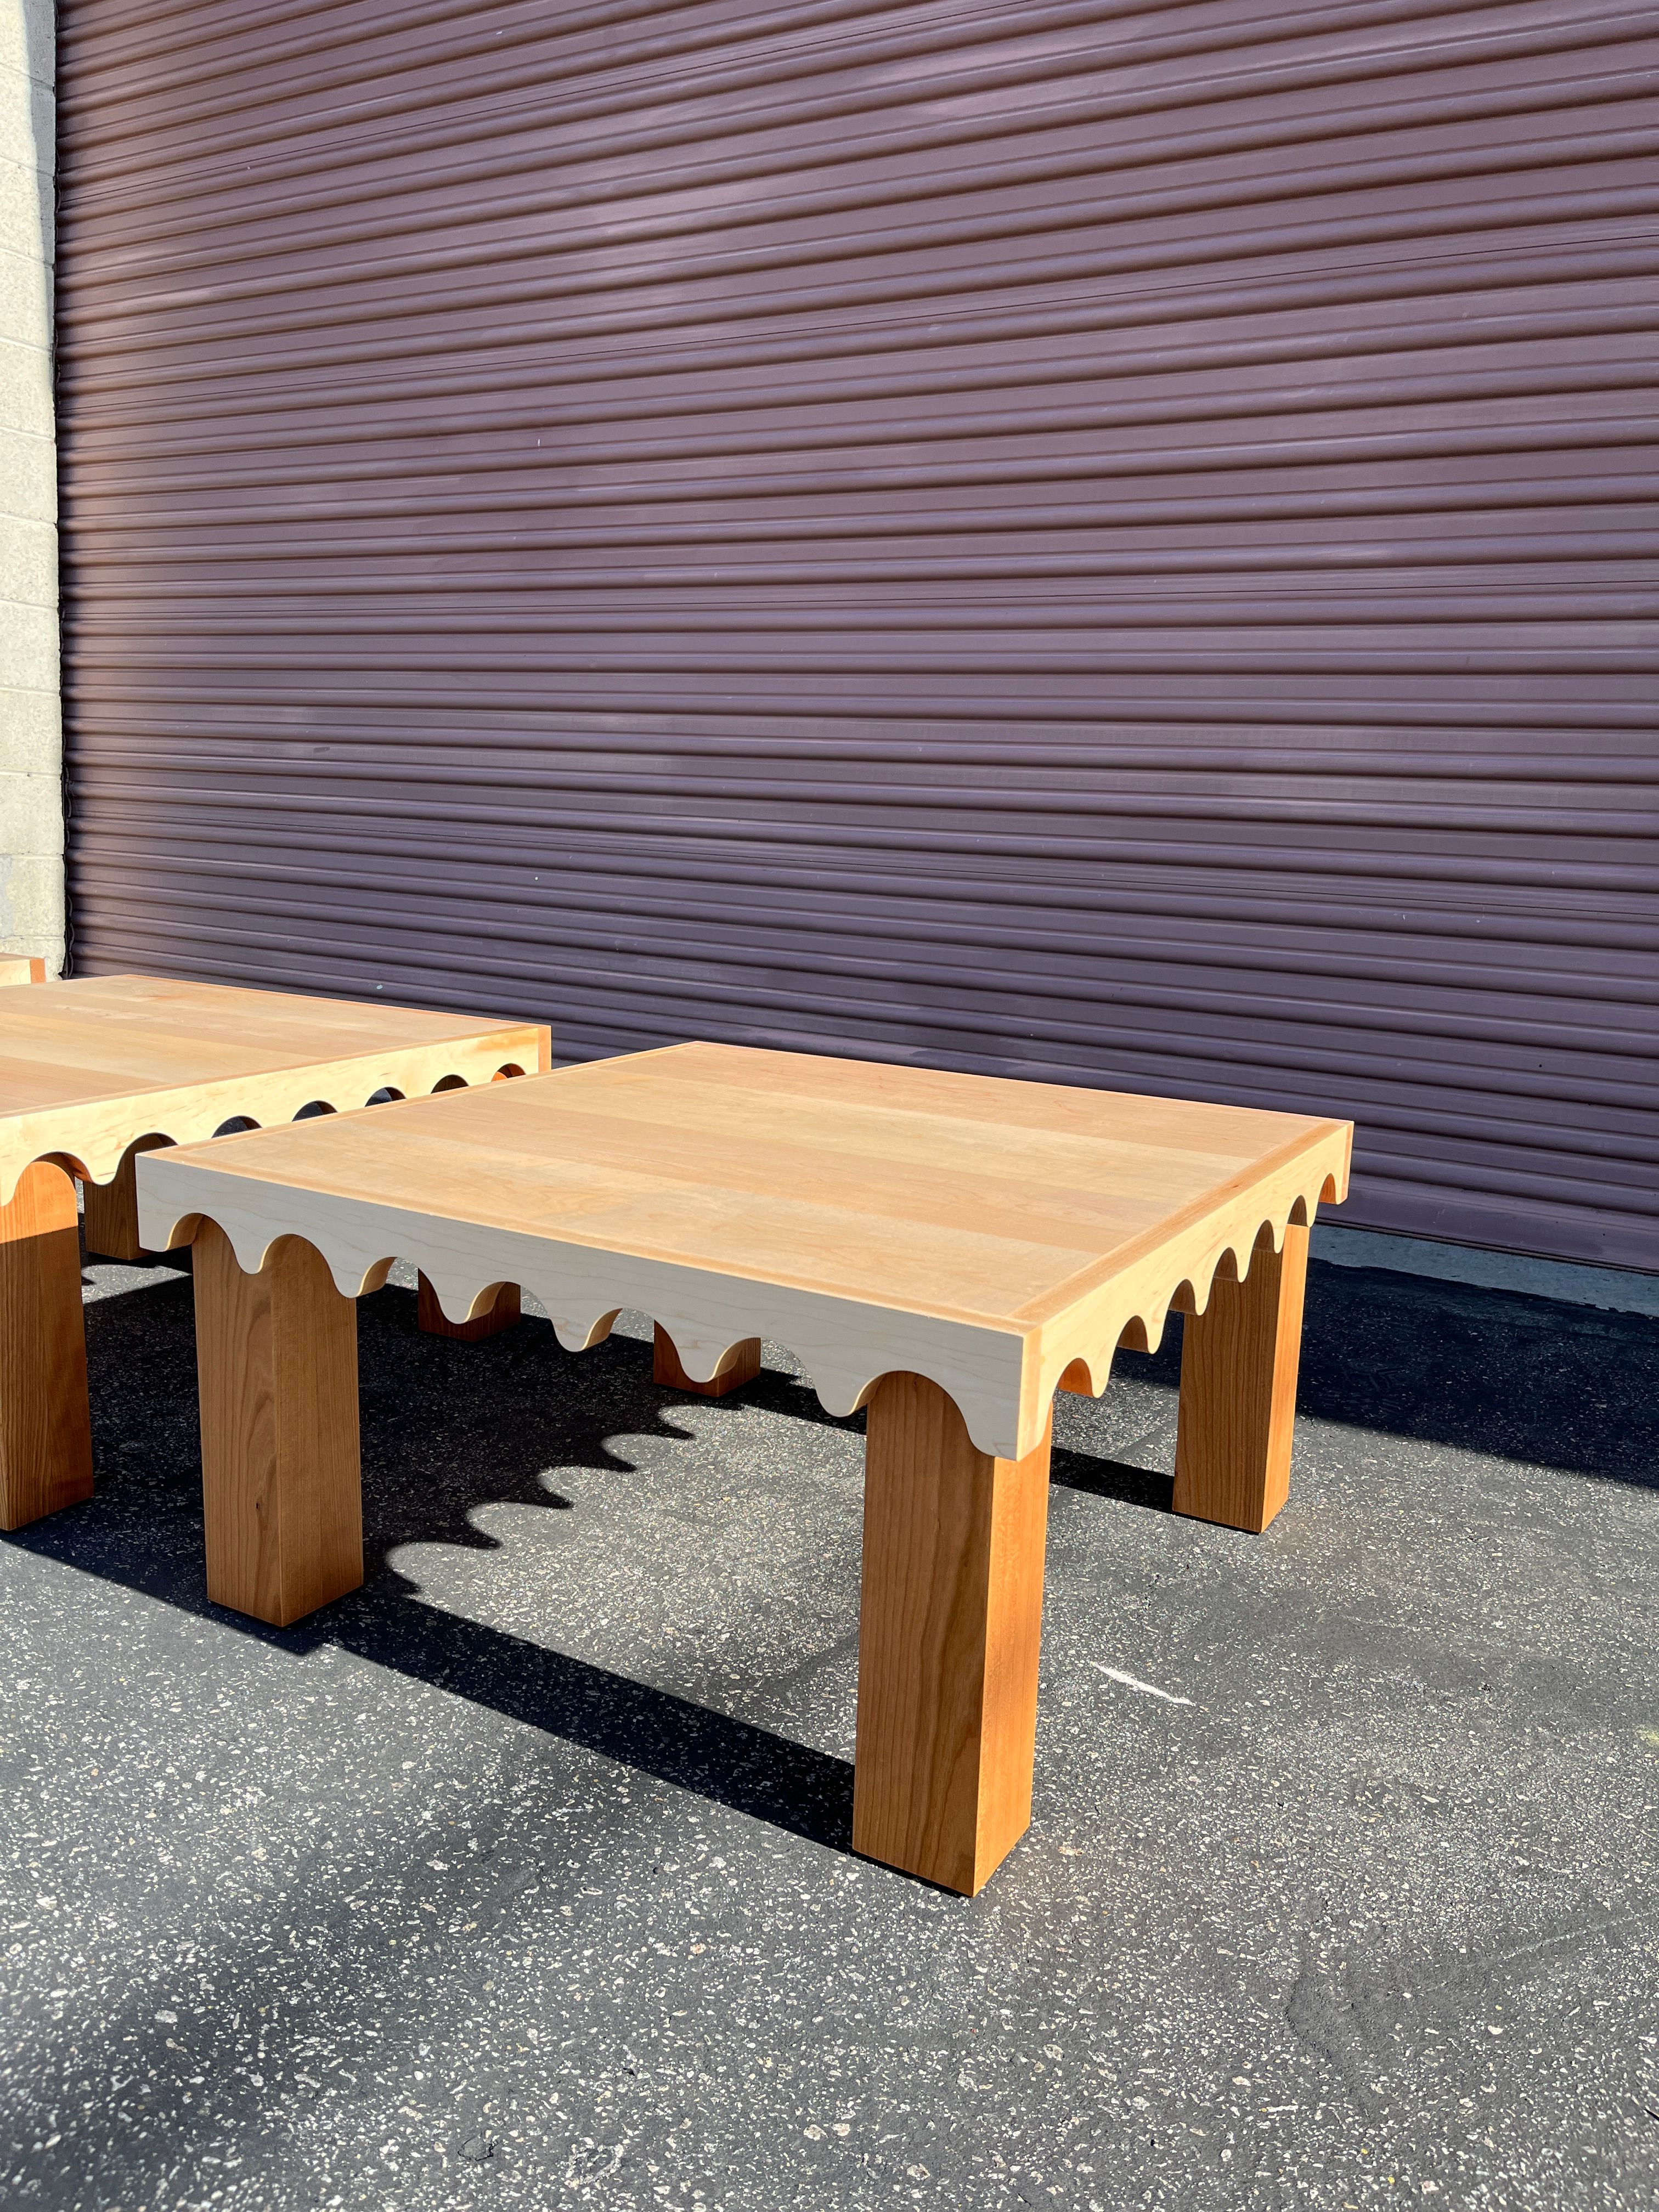  Scallop Tables - Laun Studio product image 5